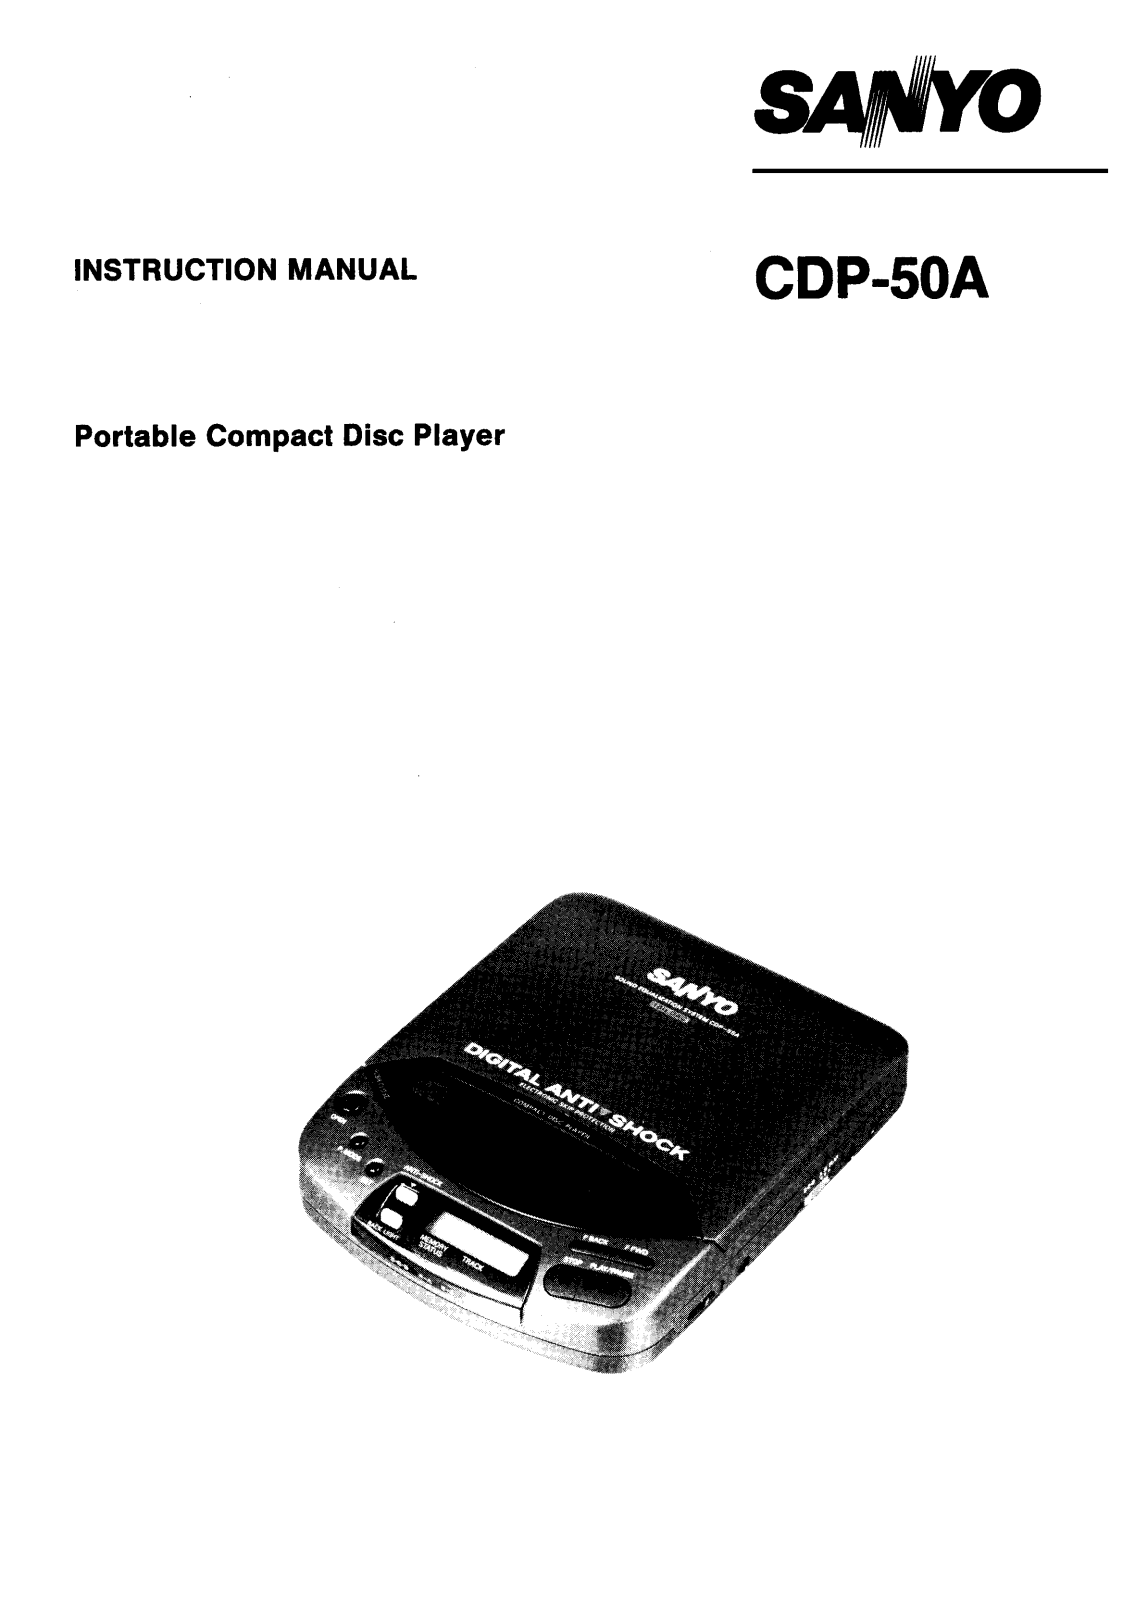 Sanyo CDP-50A Instruction Manual